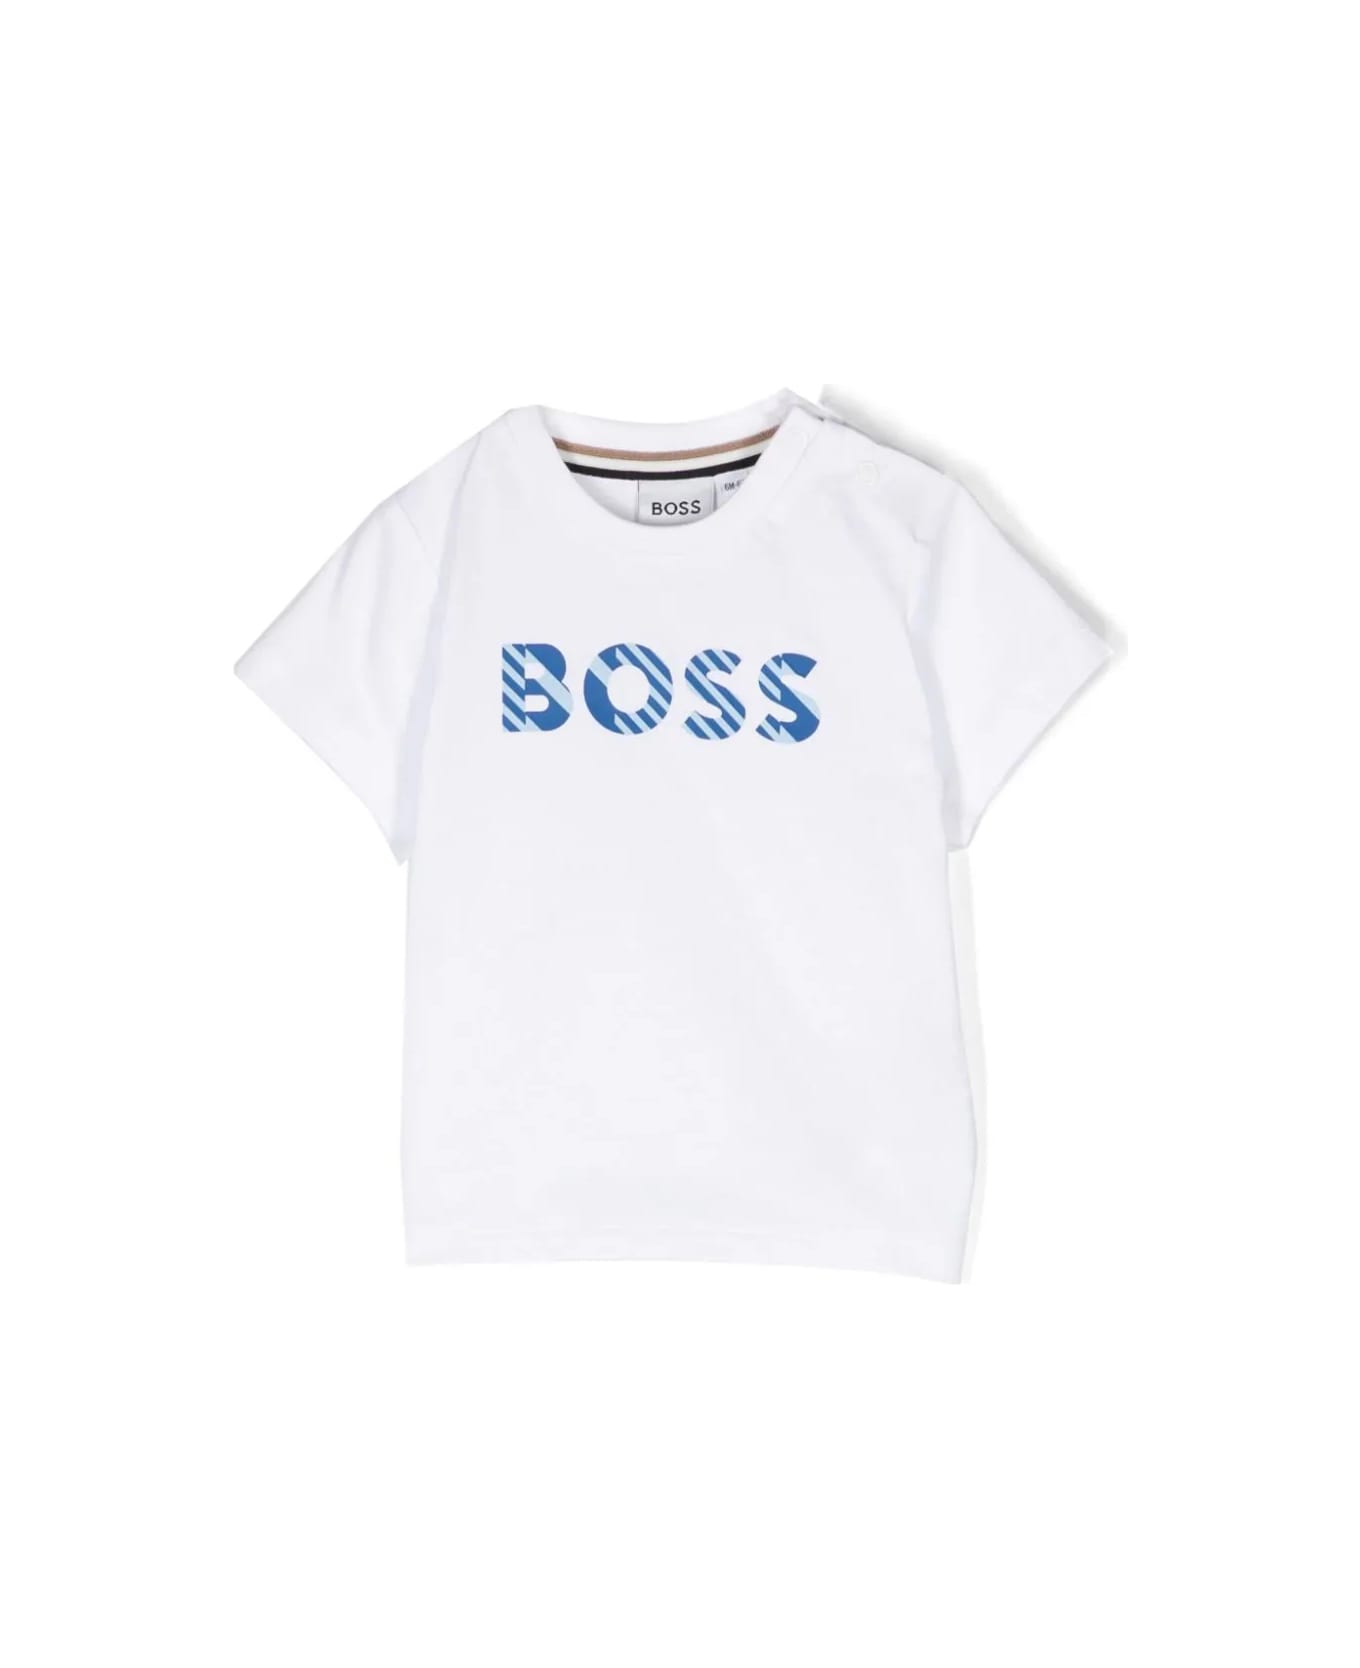 Hugo Boss T-shirt With Print - White